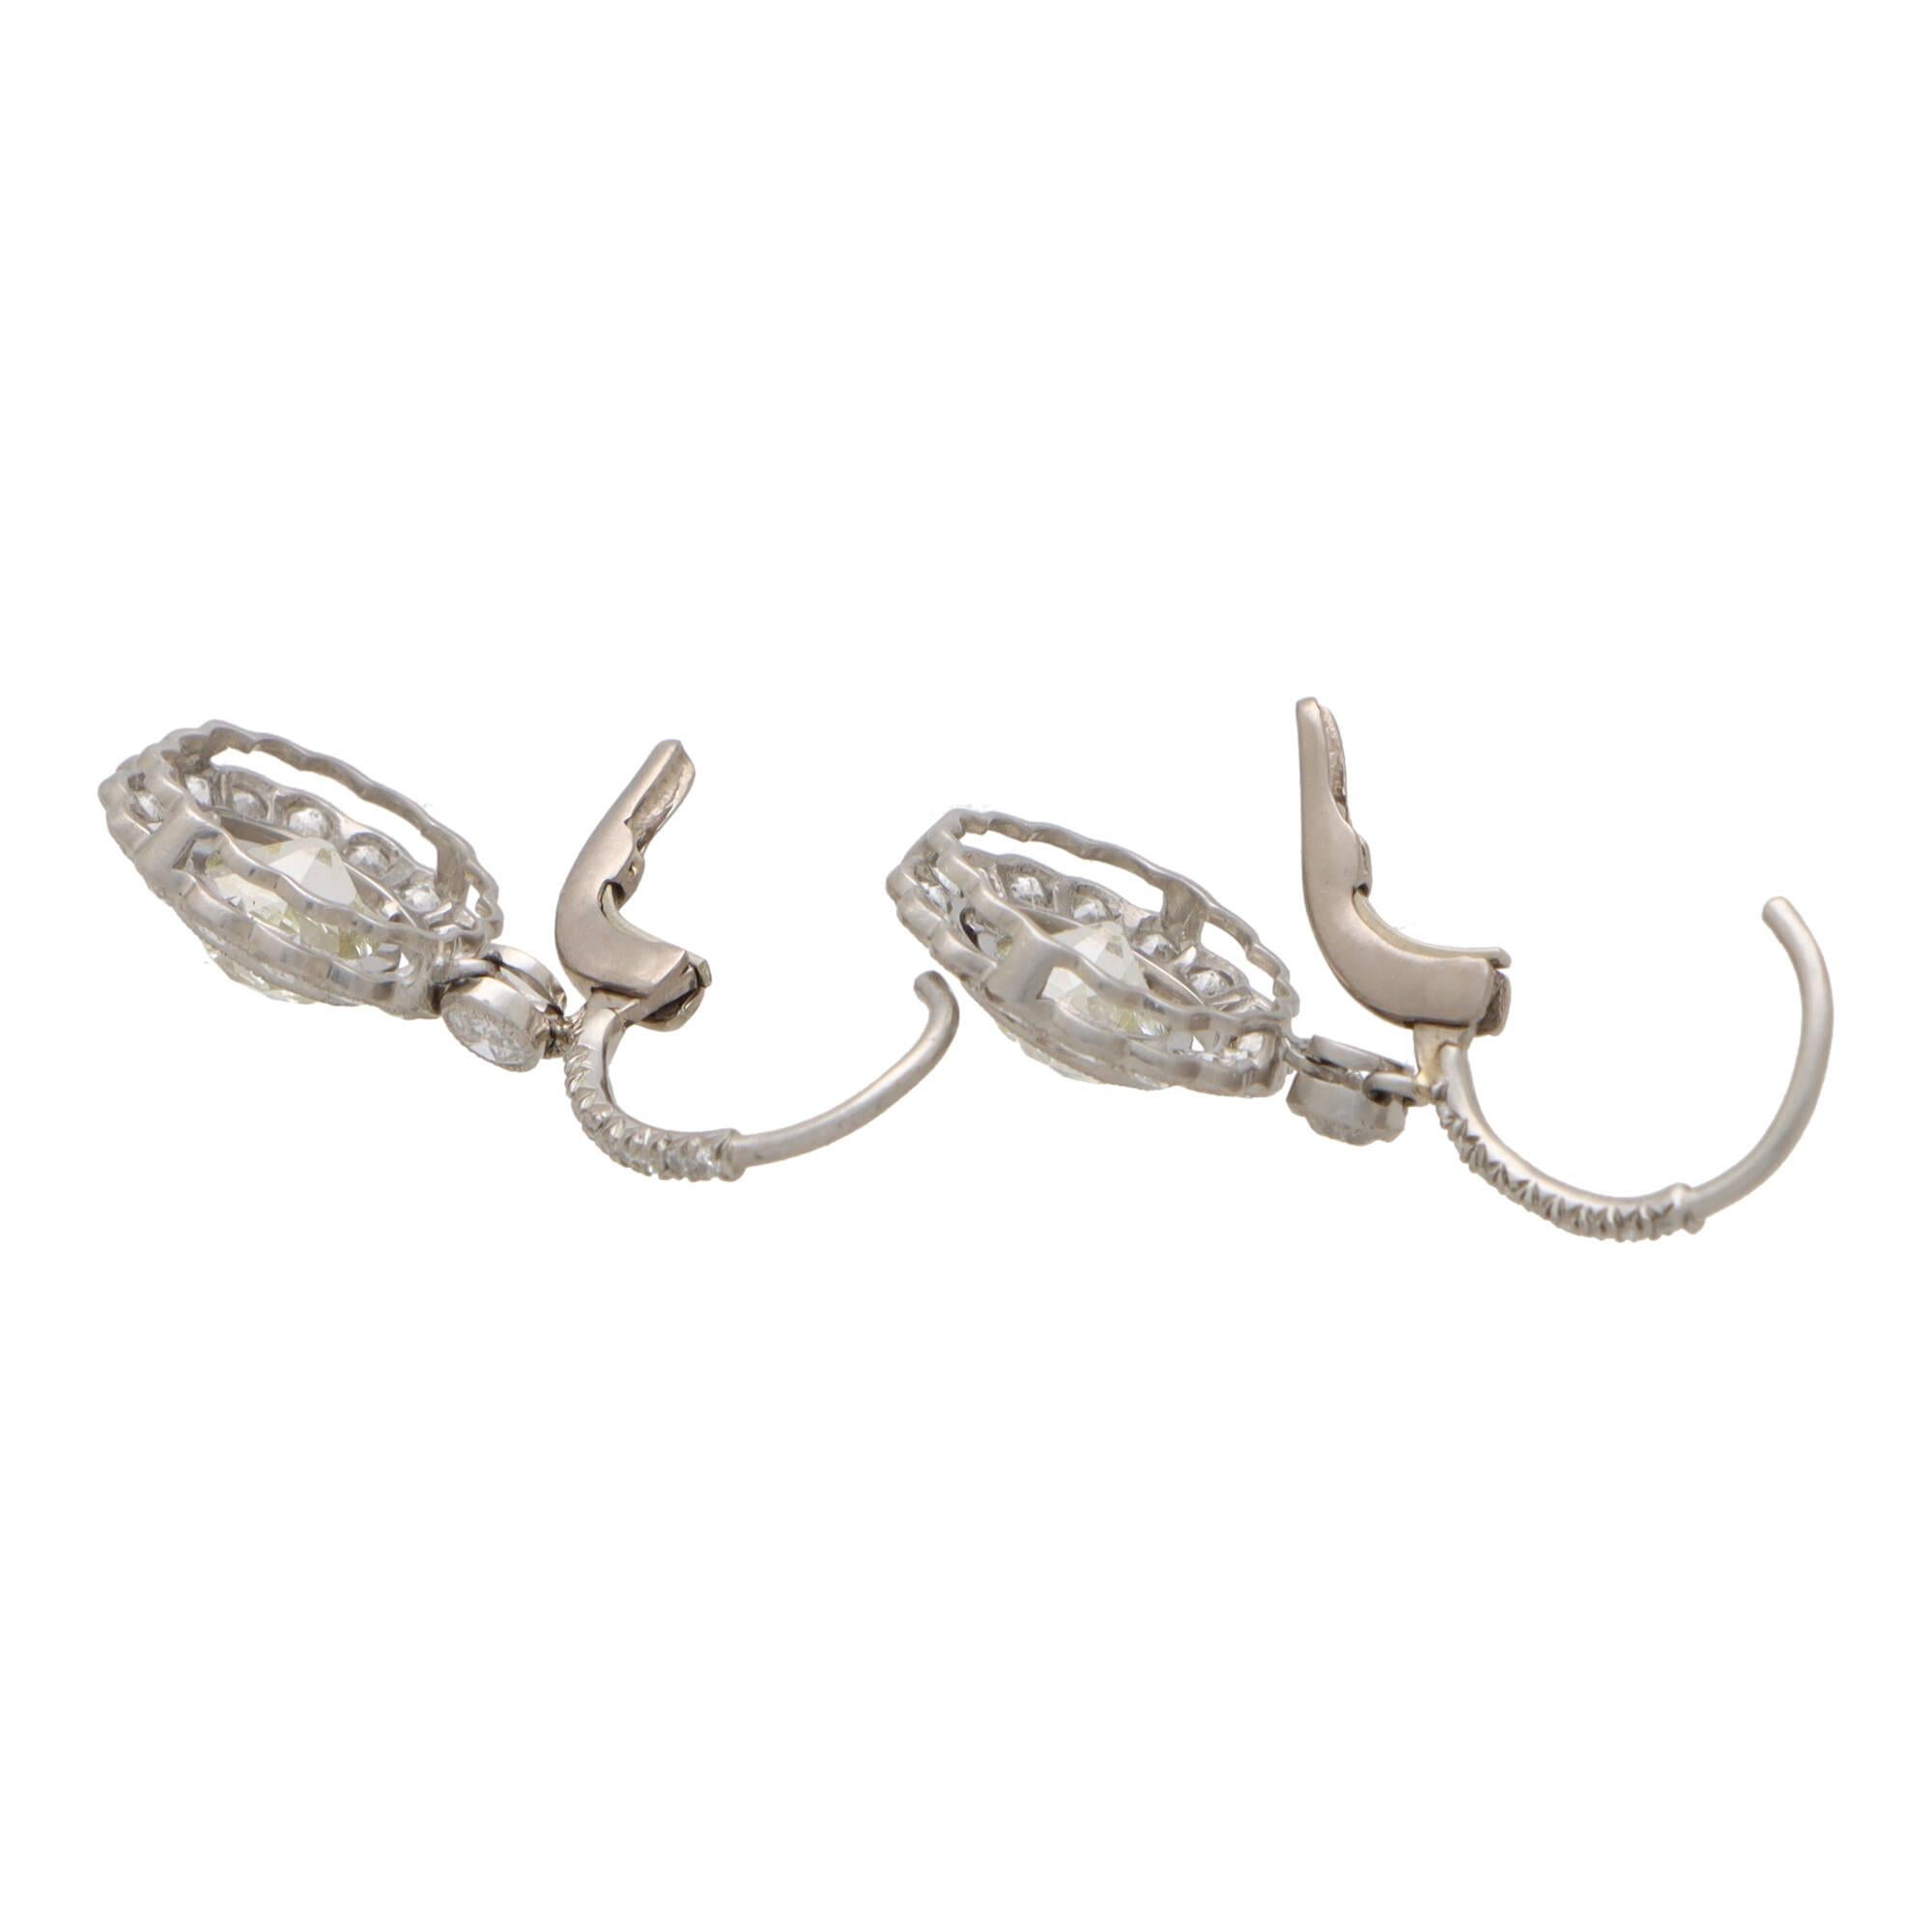 Edwardian Vintage Inspired Old Cut Diamond Cluster Drop Earrings Set in Platinum